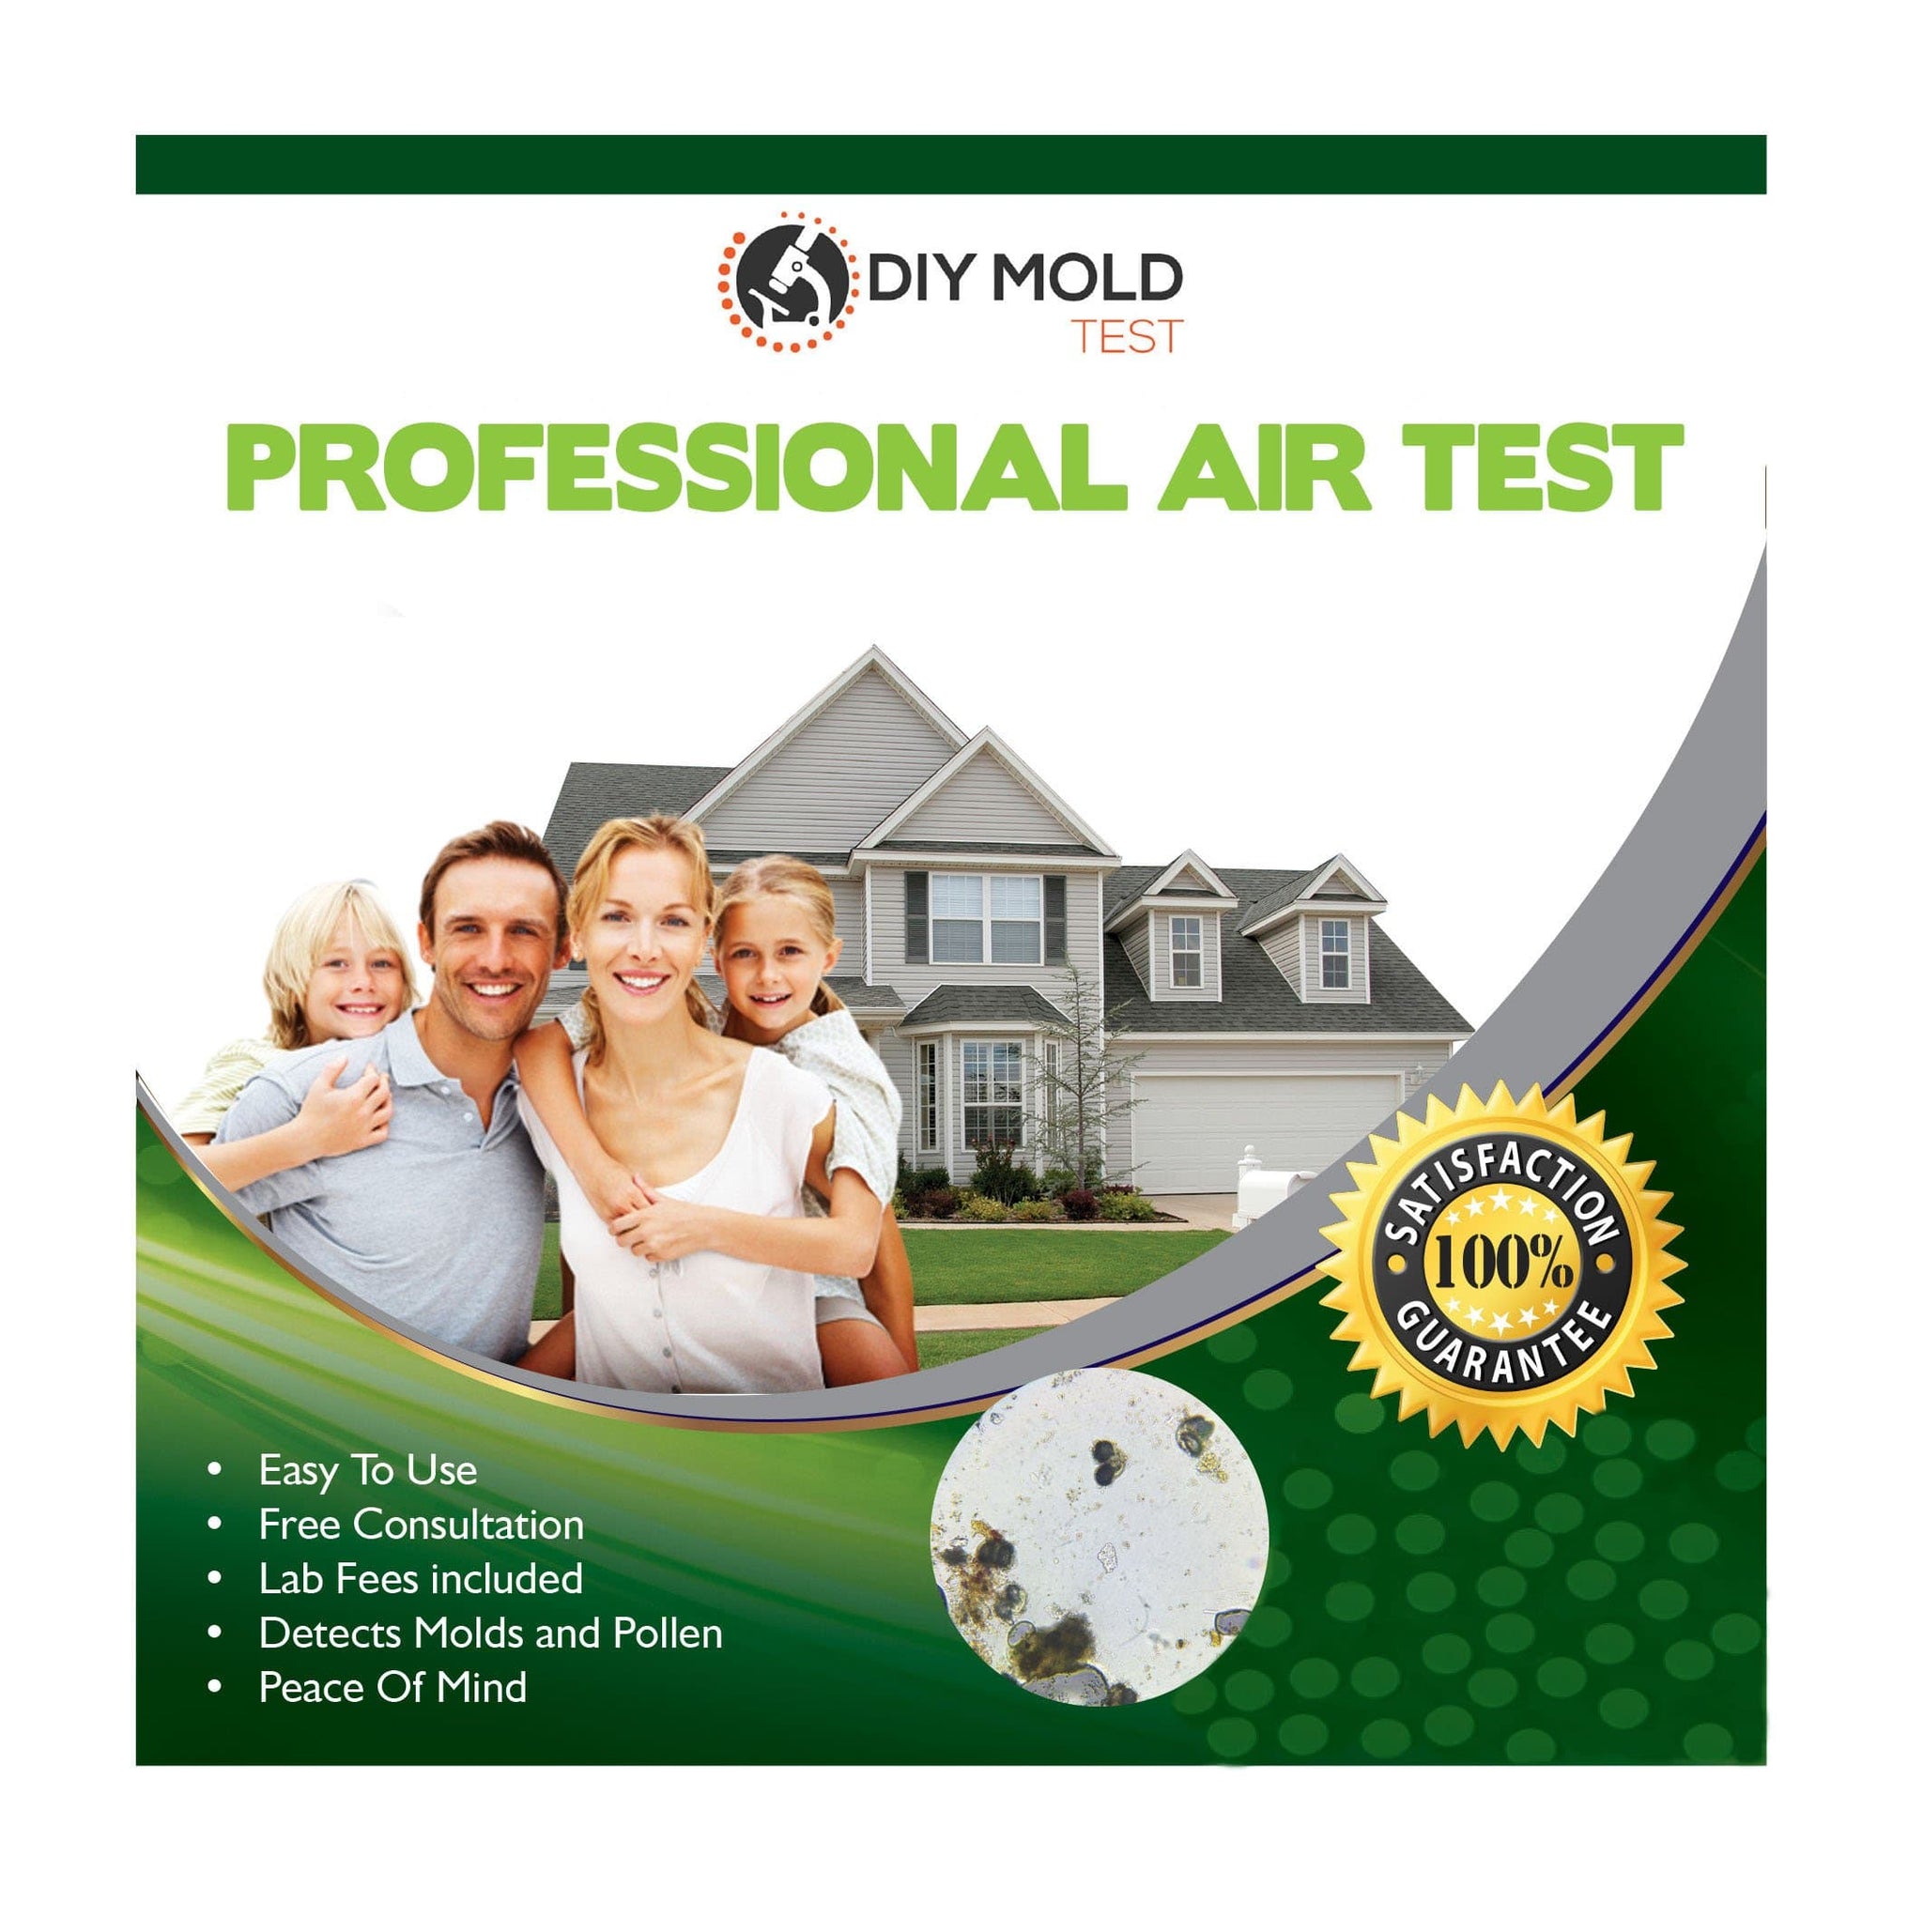 DIY Mold Air Test Kit  Professional Grade HVAC Toxic Mold Test -  Germaphobix